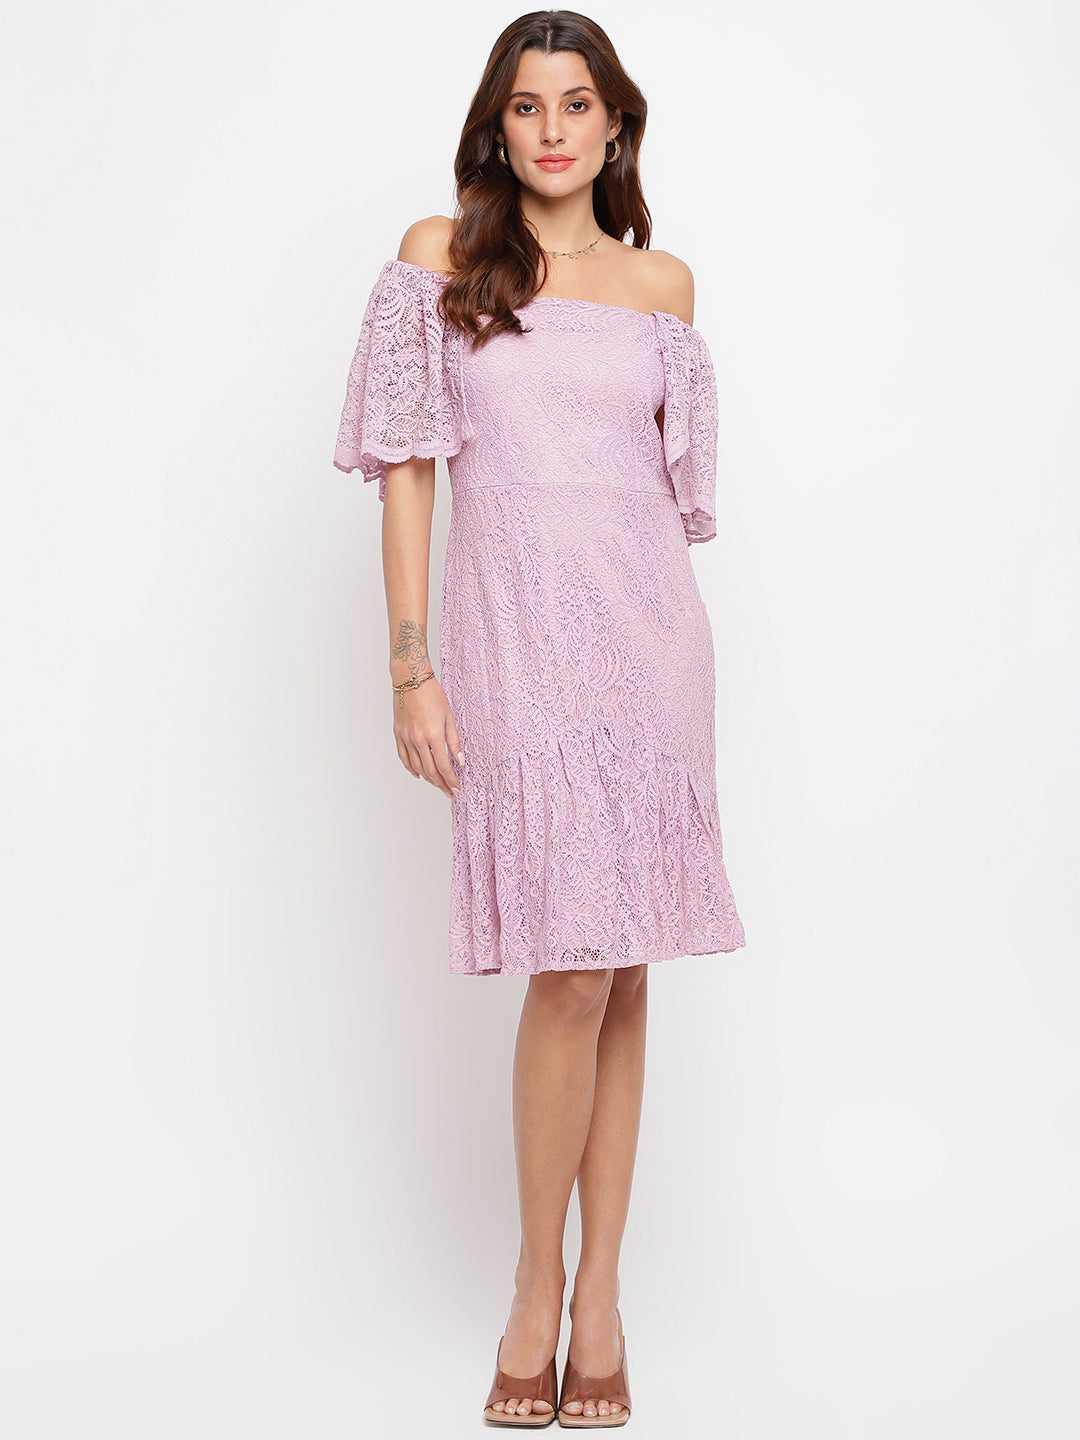 Lilac Half Sleeve Strapless Dress